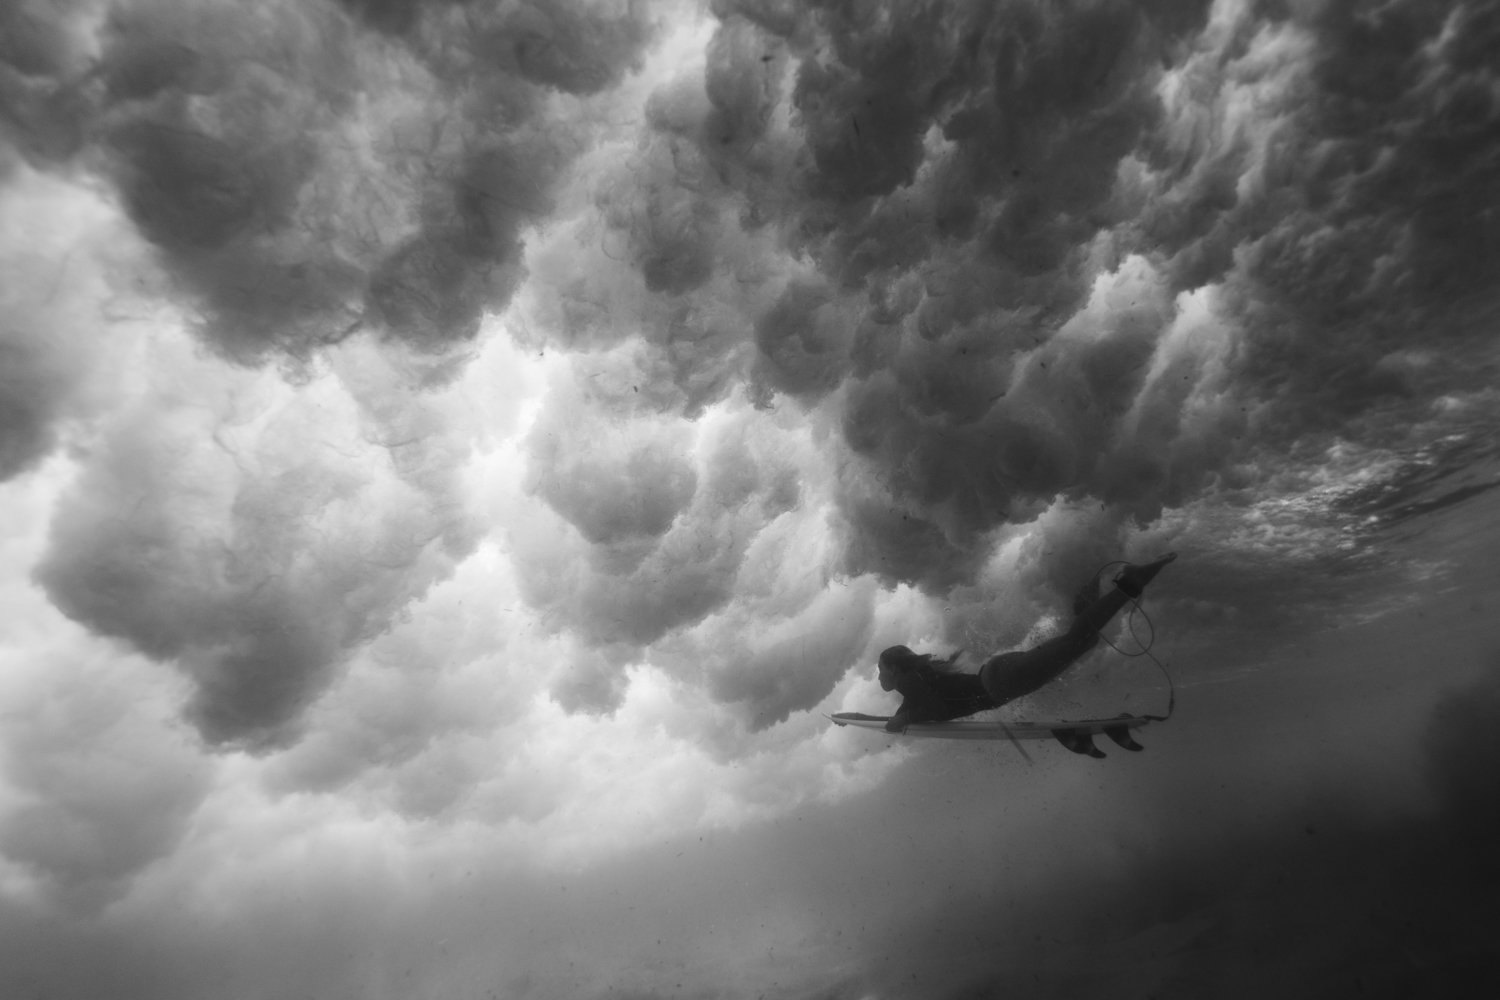 surf underwater corse corsica sea mediterranean island france french photographer photographe ajaccio Krista Espino Capo di feno wave femme woman fine art photography sous l'eau marine lamer la mer-15.jpg